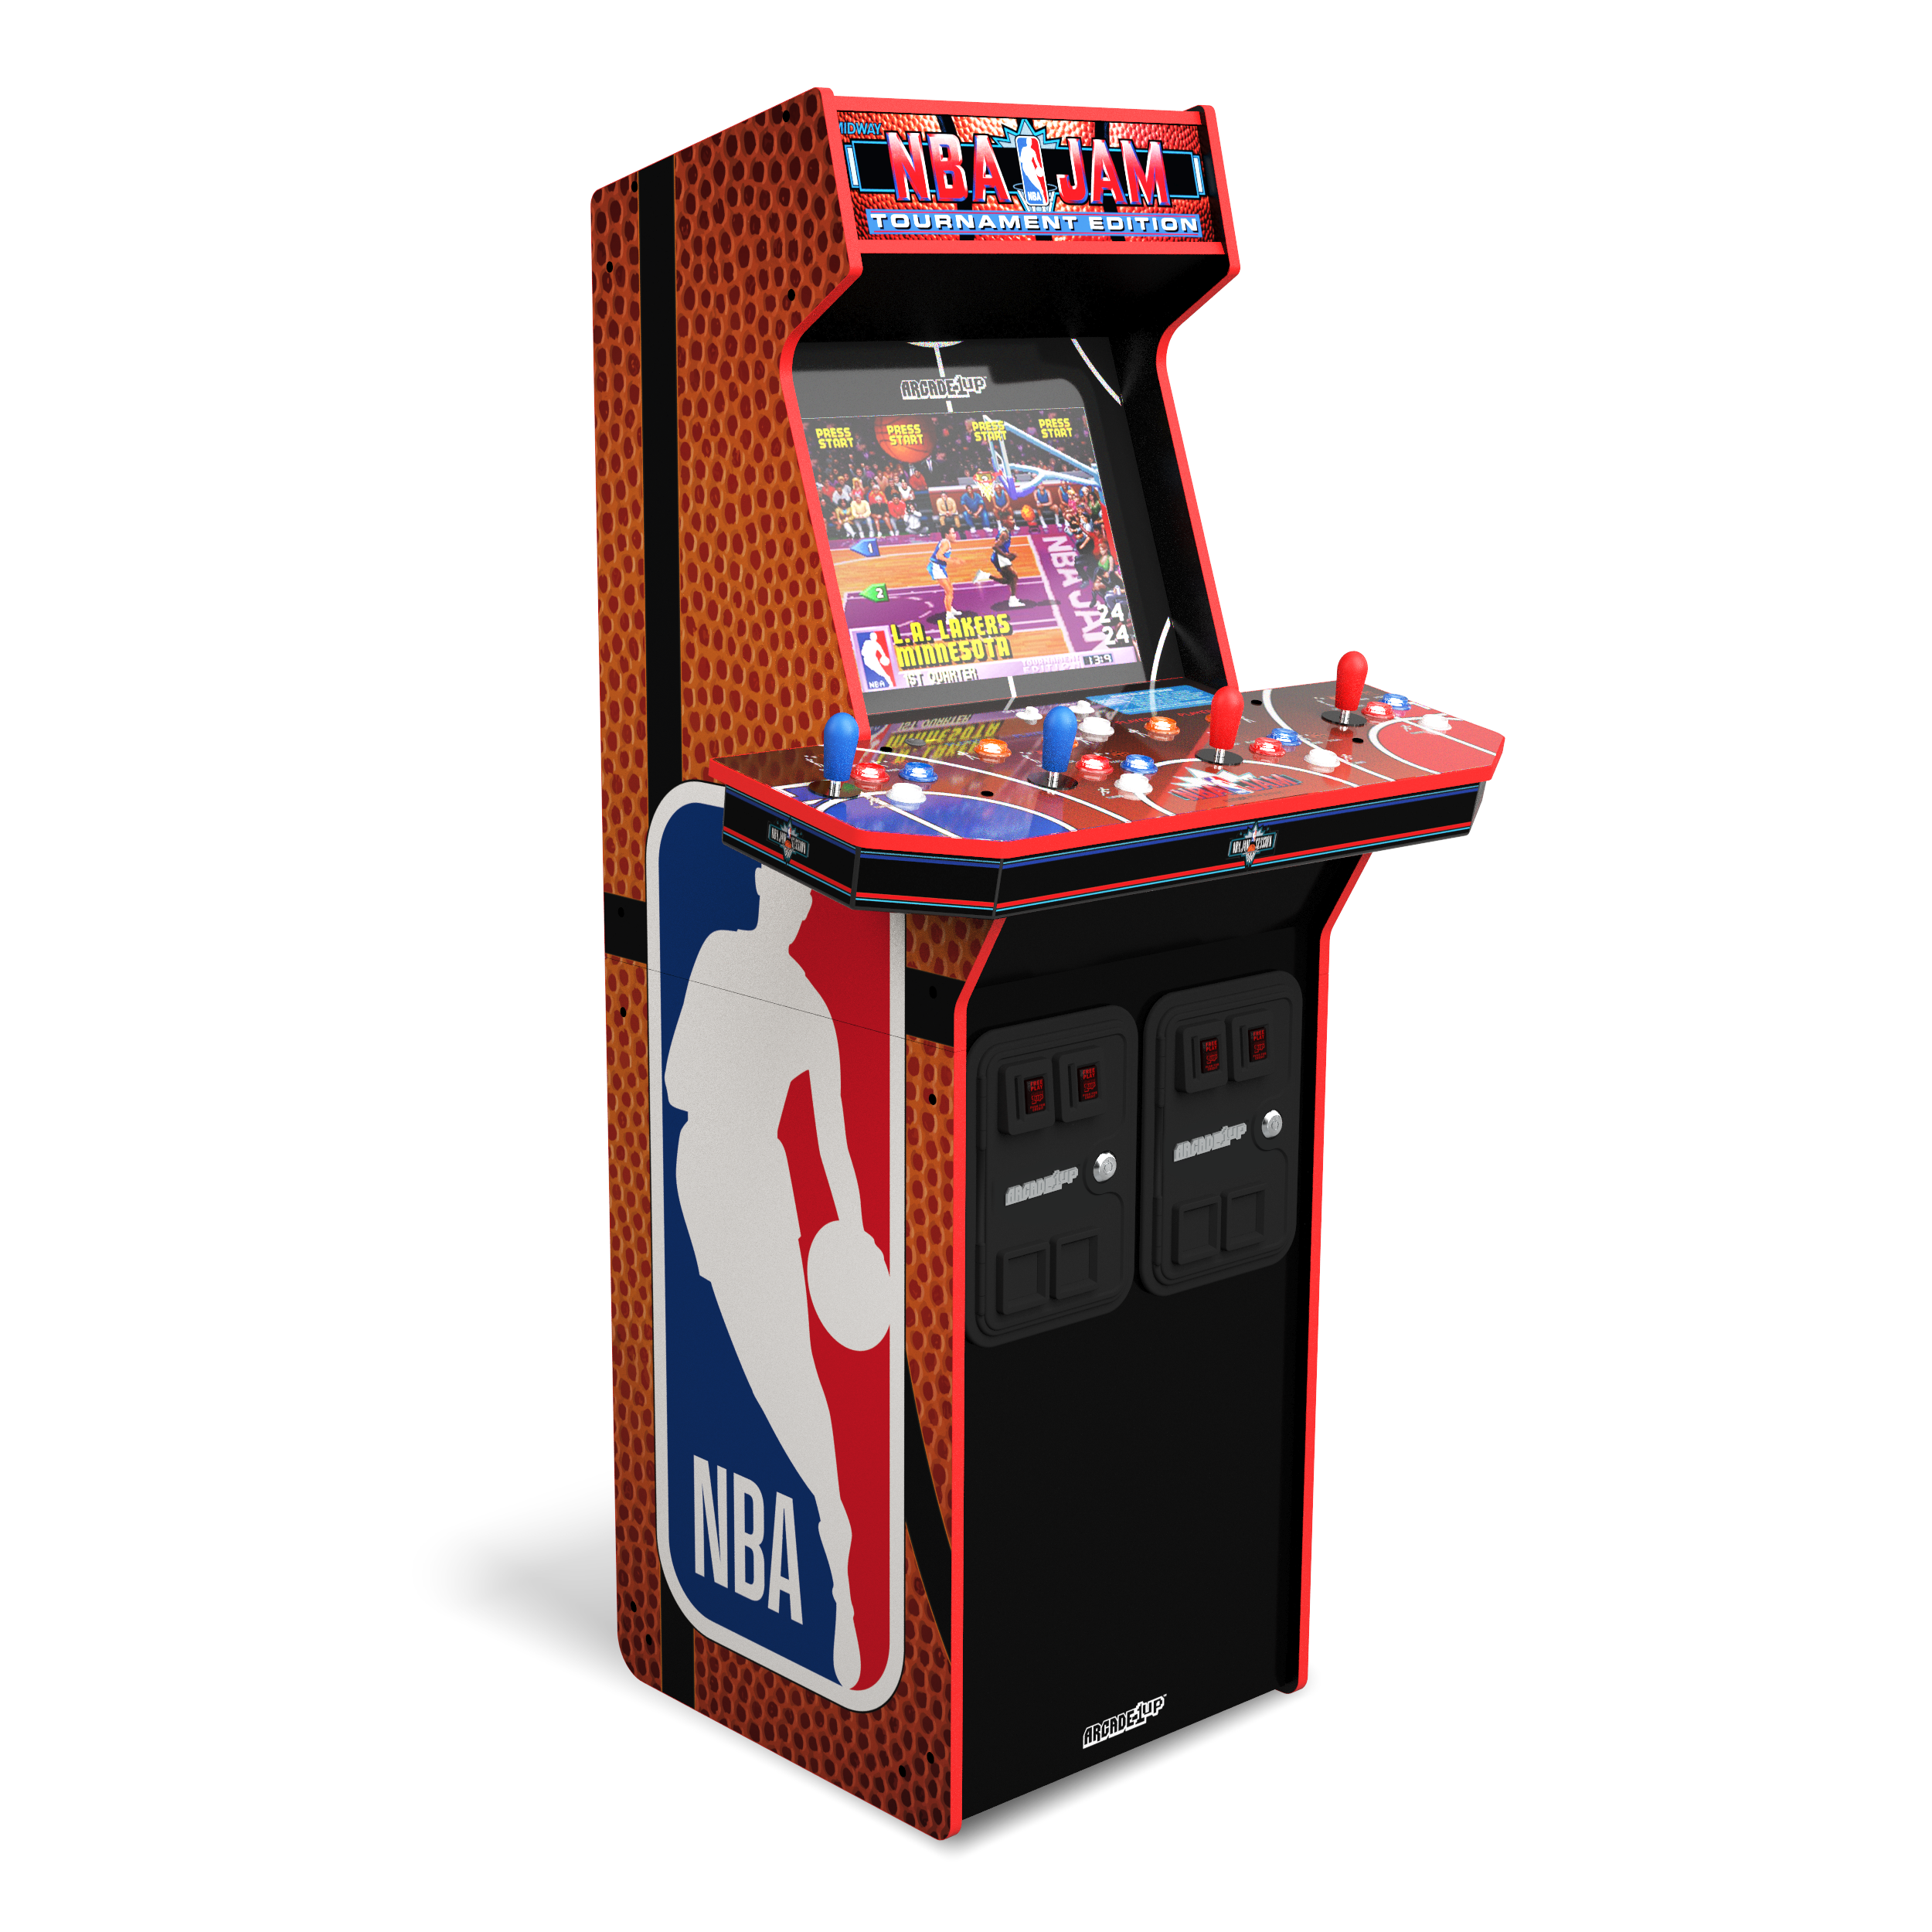 NBA Jam Arcade Cabinet From Arcade 1up